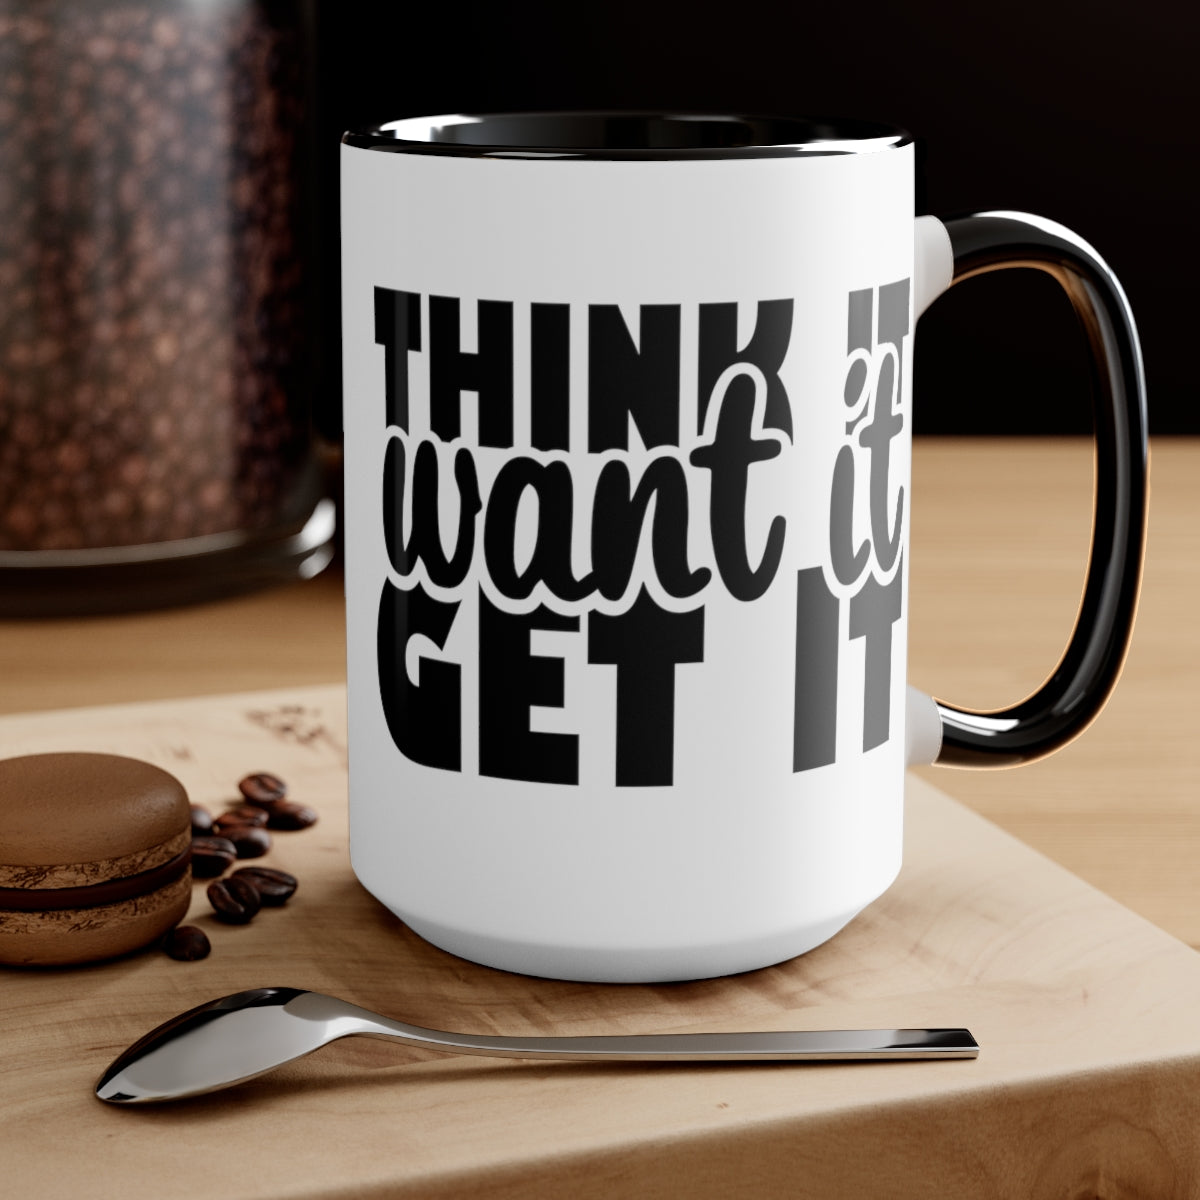 TWG Coffee Mug, 15oz